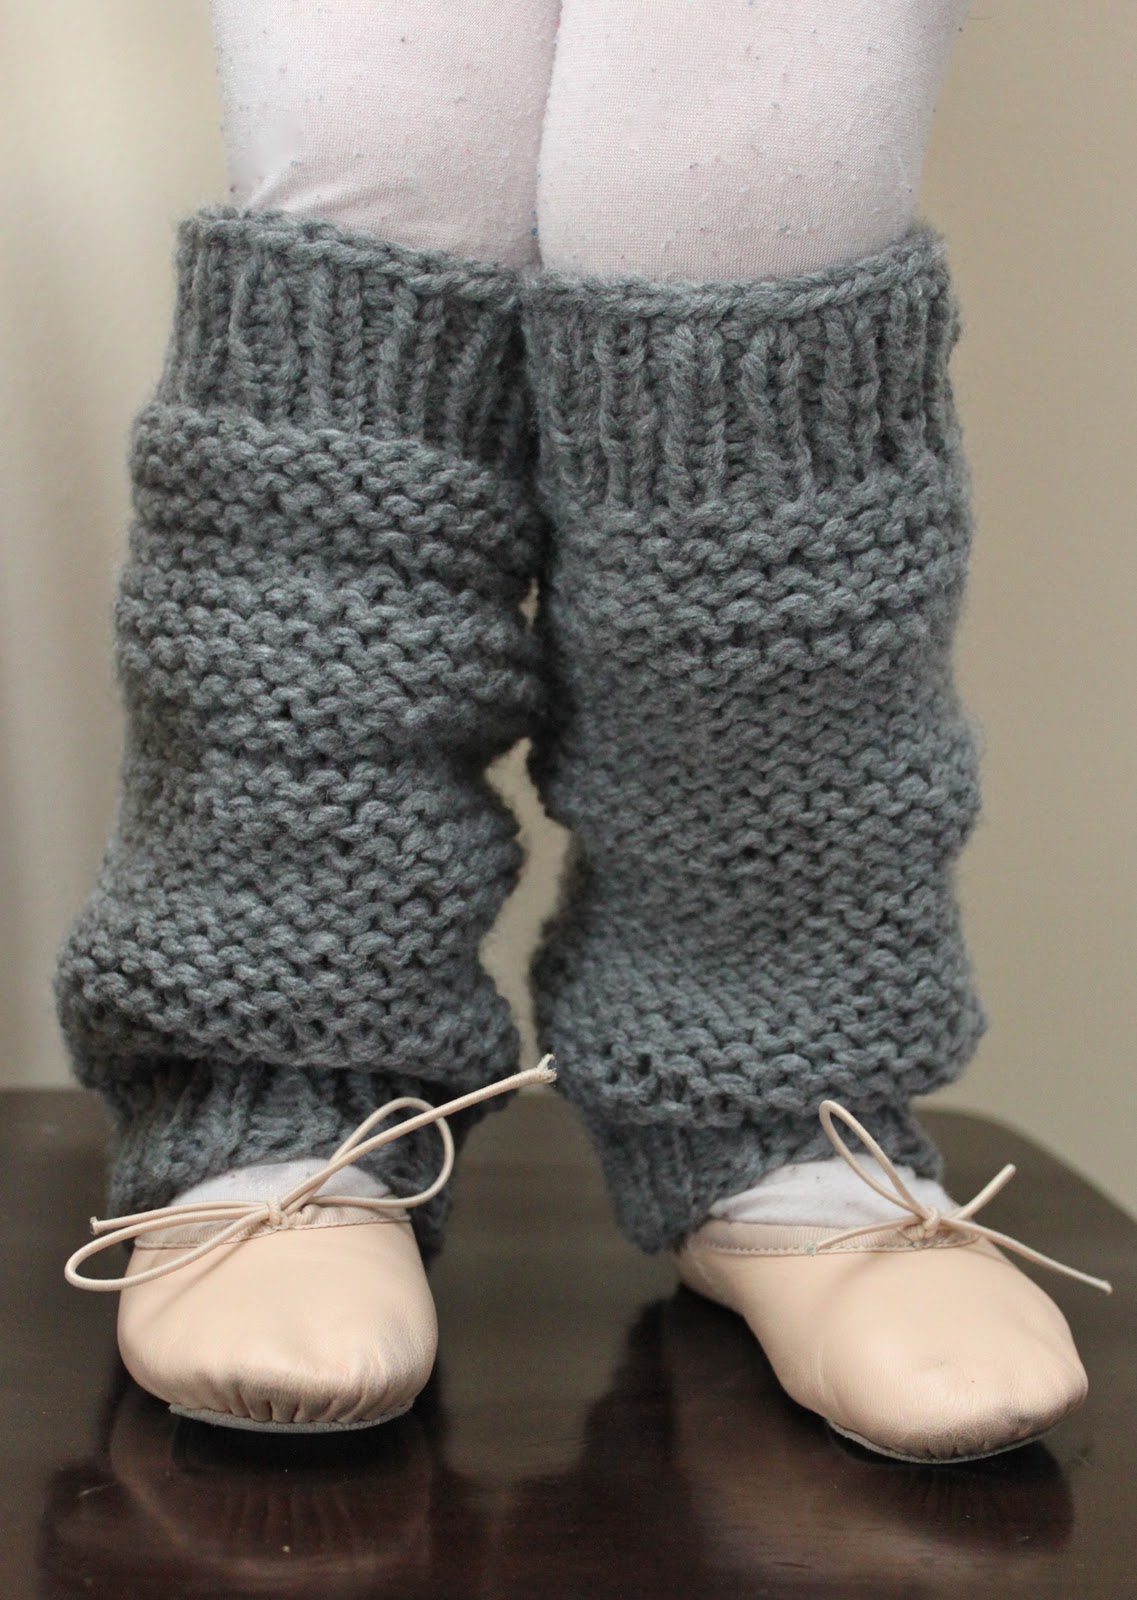 knit leg warmers little girlsu0027 knit legwarmers {a pattern} bjhrusn